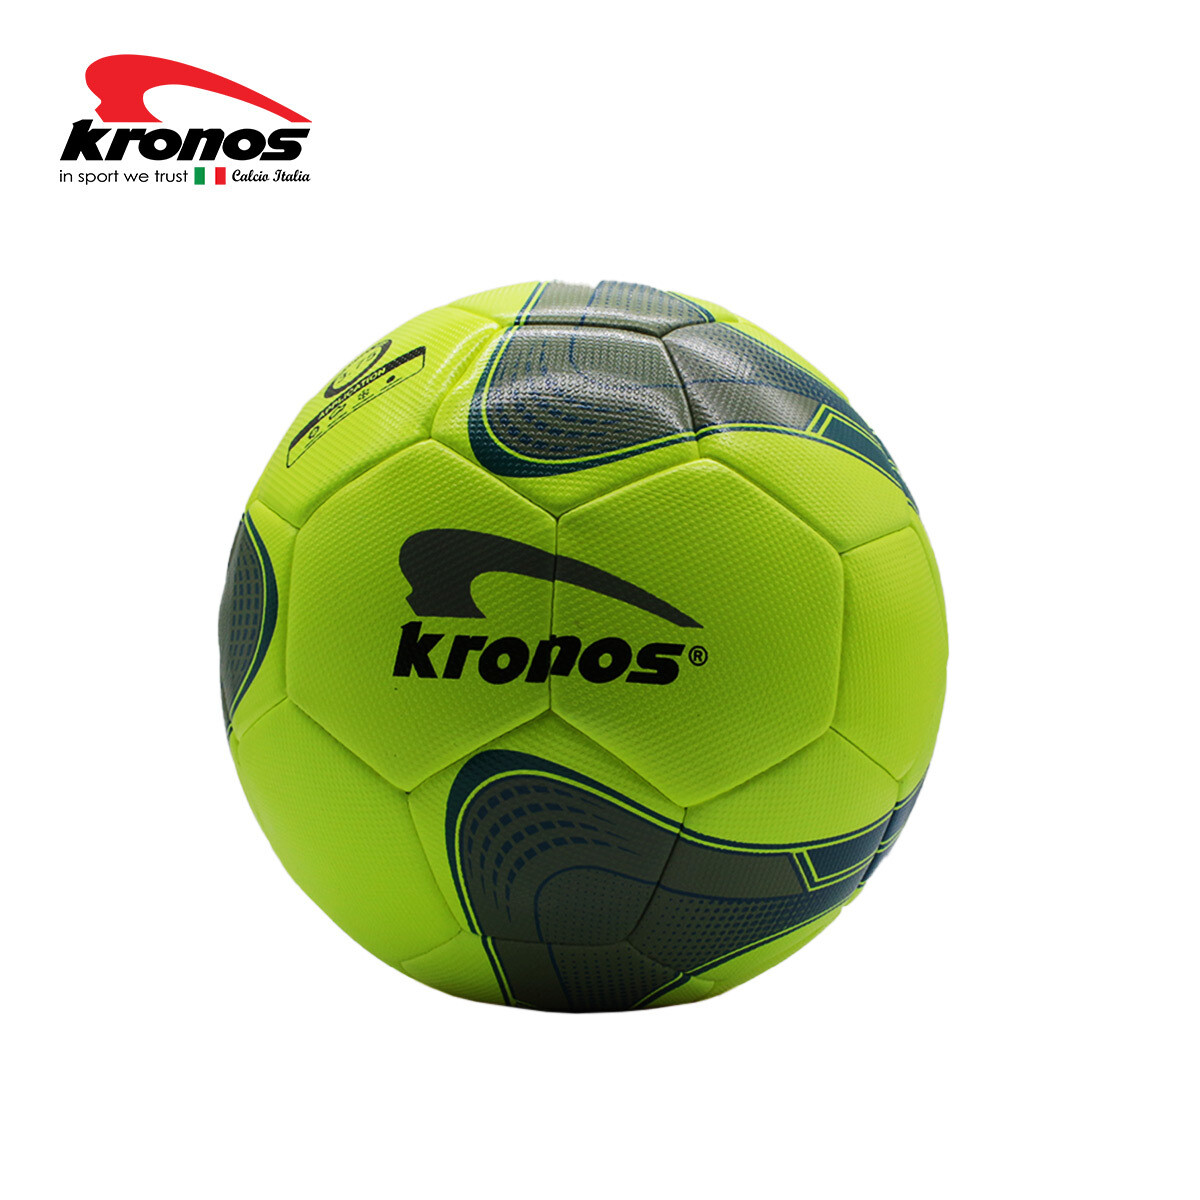 Kronos Futsal Ball